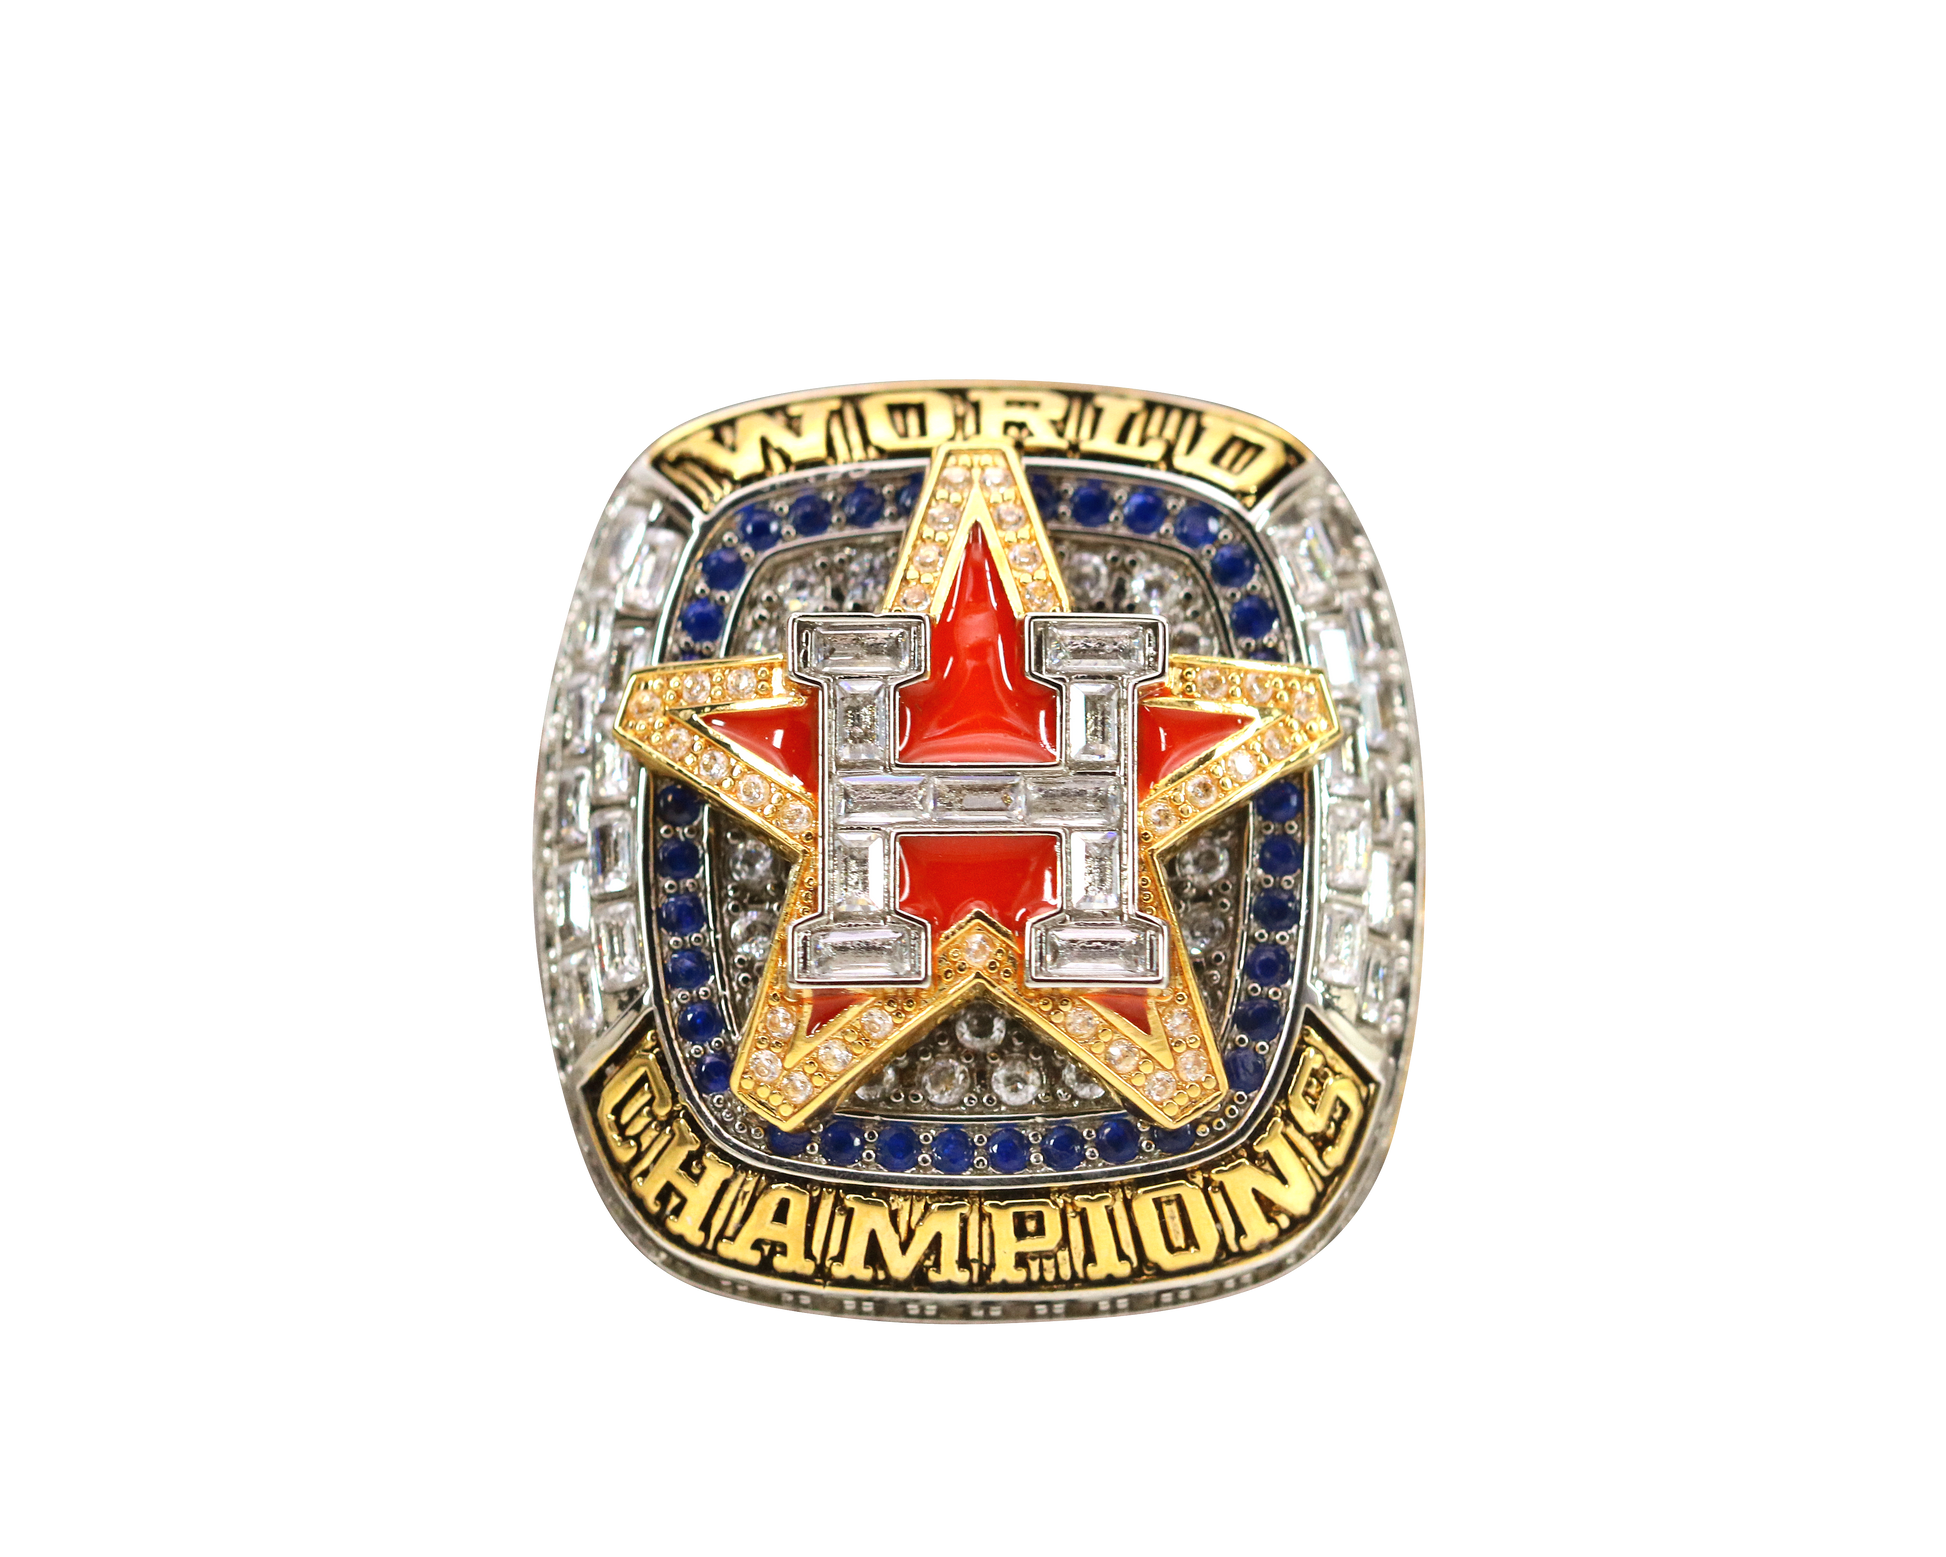 Rawlings, 2022 Houston Astros World Series Champions Gold Replica Baseball, MLB League